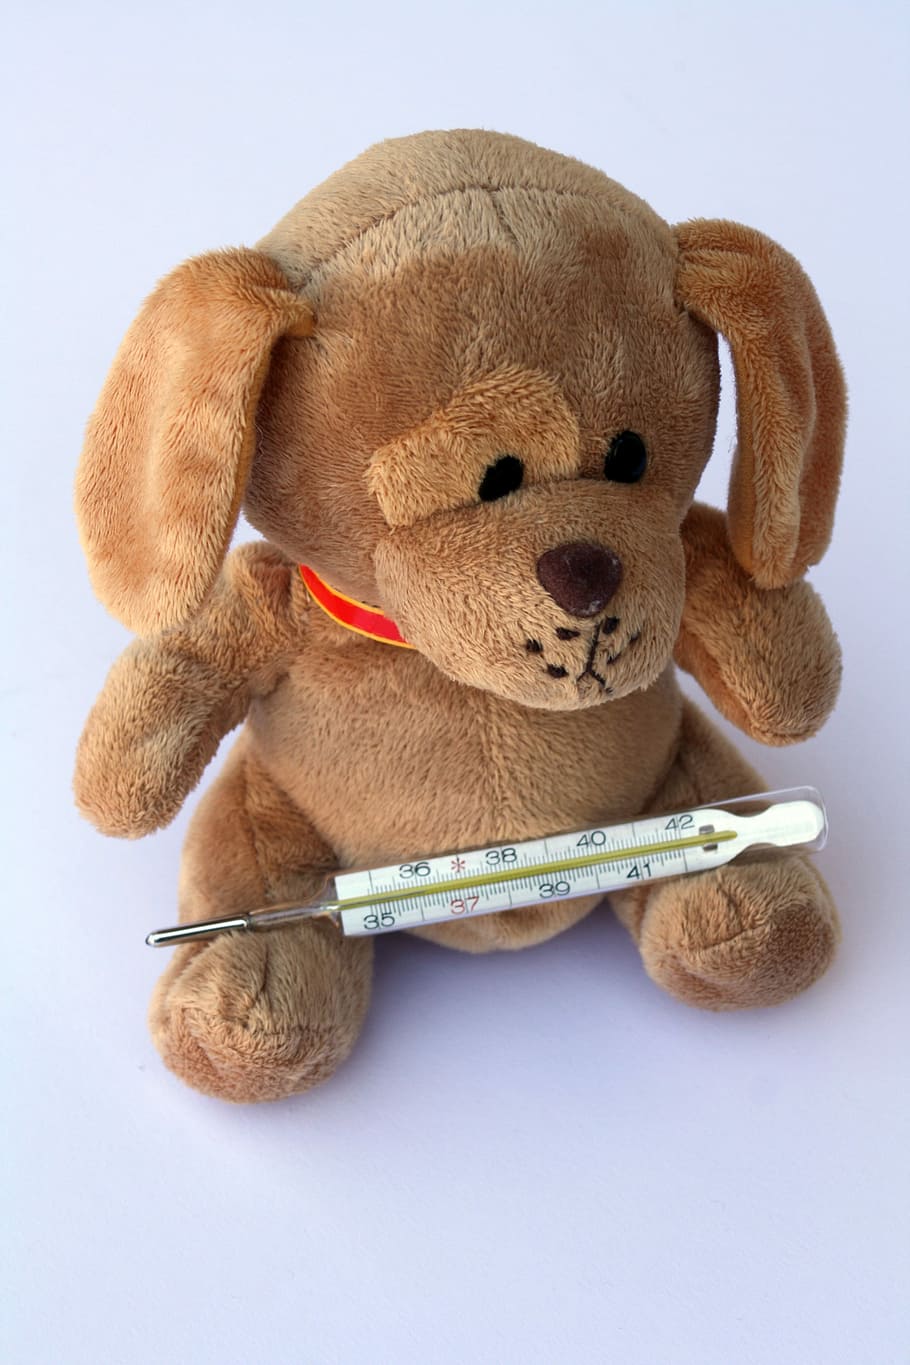 plush, toy, thermometer, Dog, Stuffed Animal, Ill, teddy, injured, fever, association